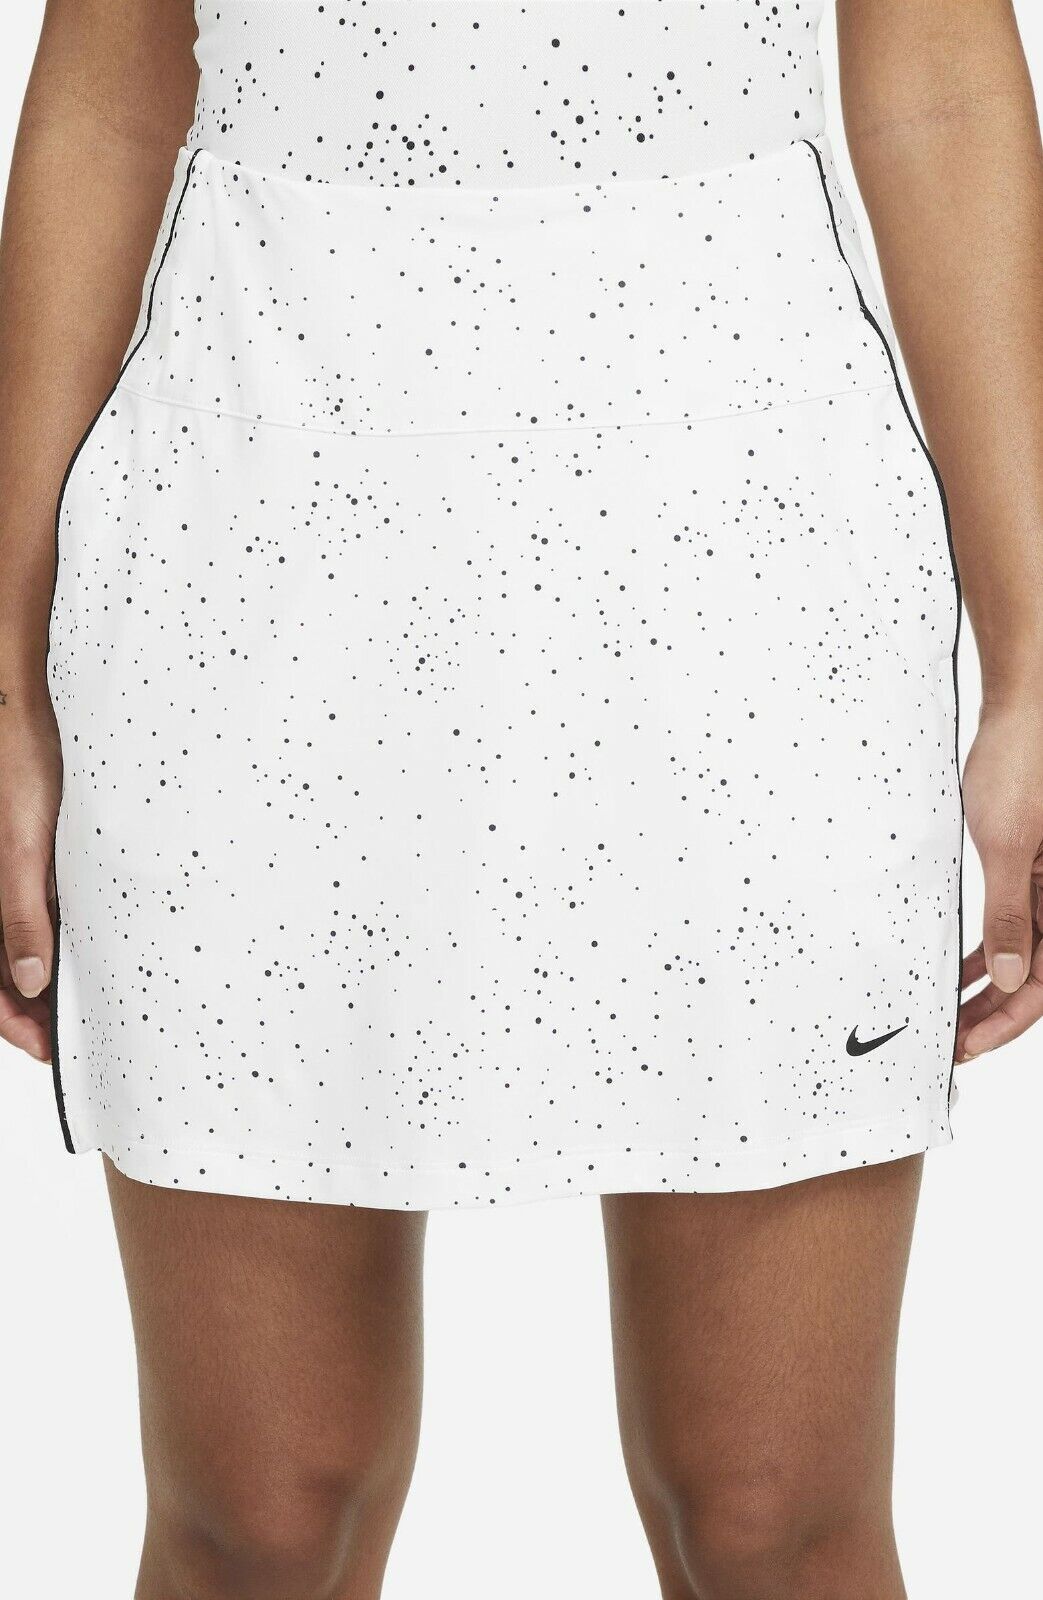 Nike Golf Nike Dri-fit Uv Print White Golf Skirt 10405 Size Xs